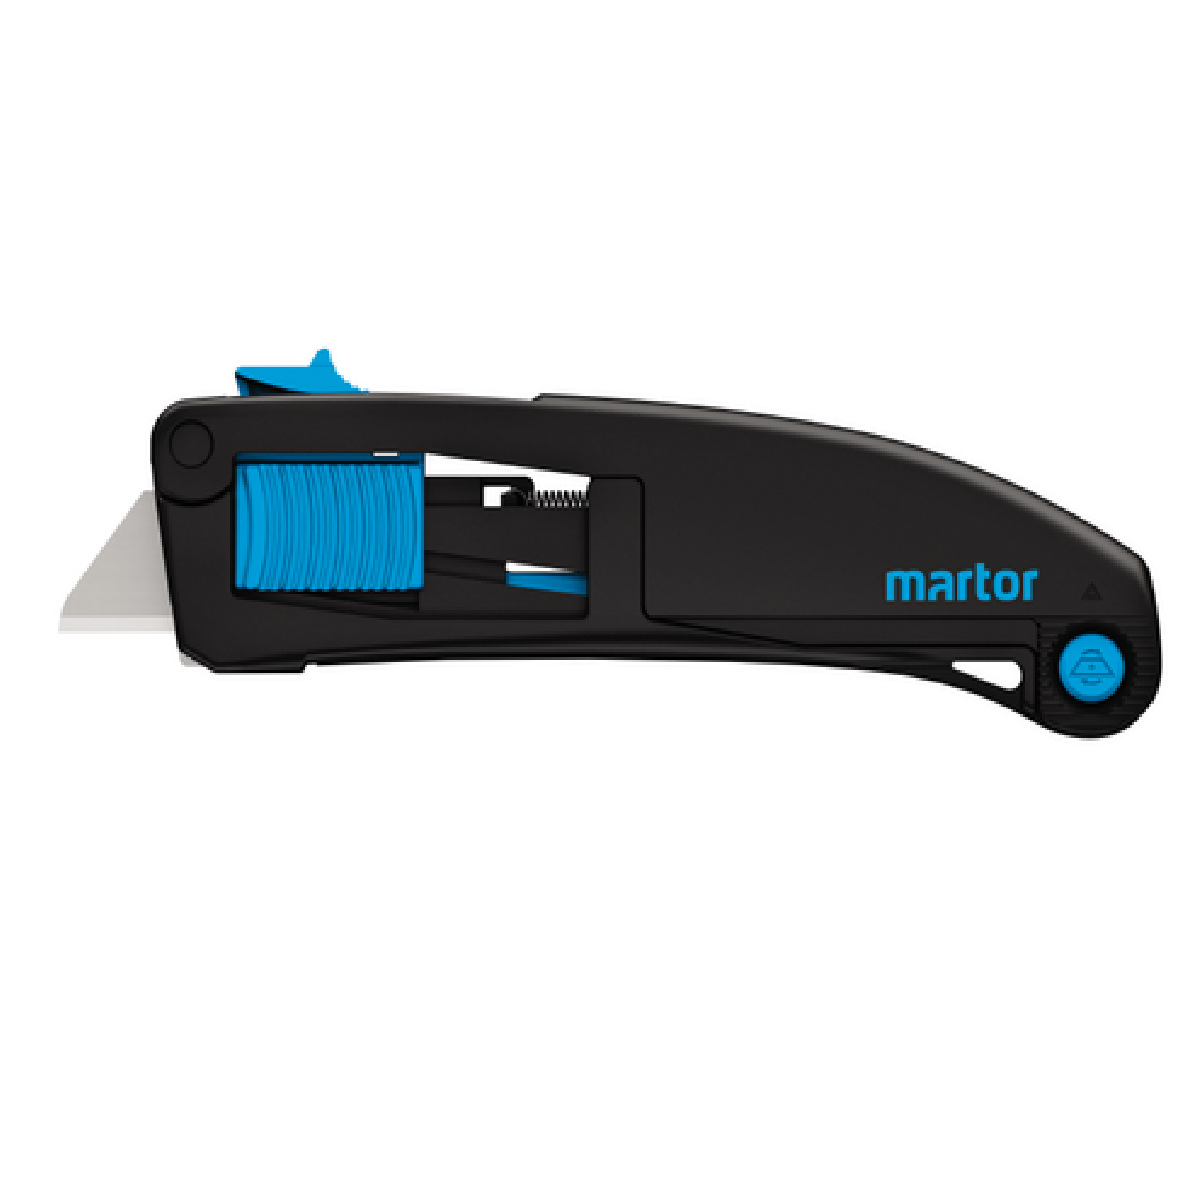 MARTOR SECUPRO MAXISAFE NO. 10130610 Fully Automatic Blade Retraction Knife